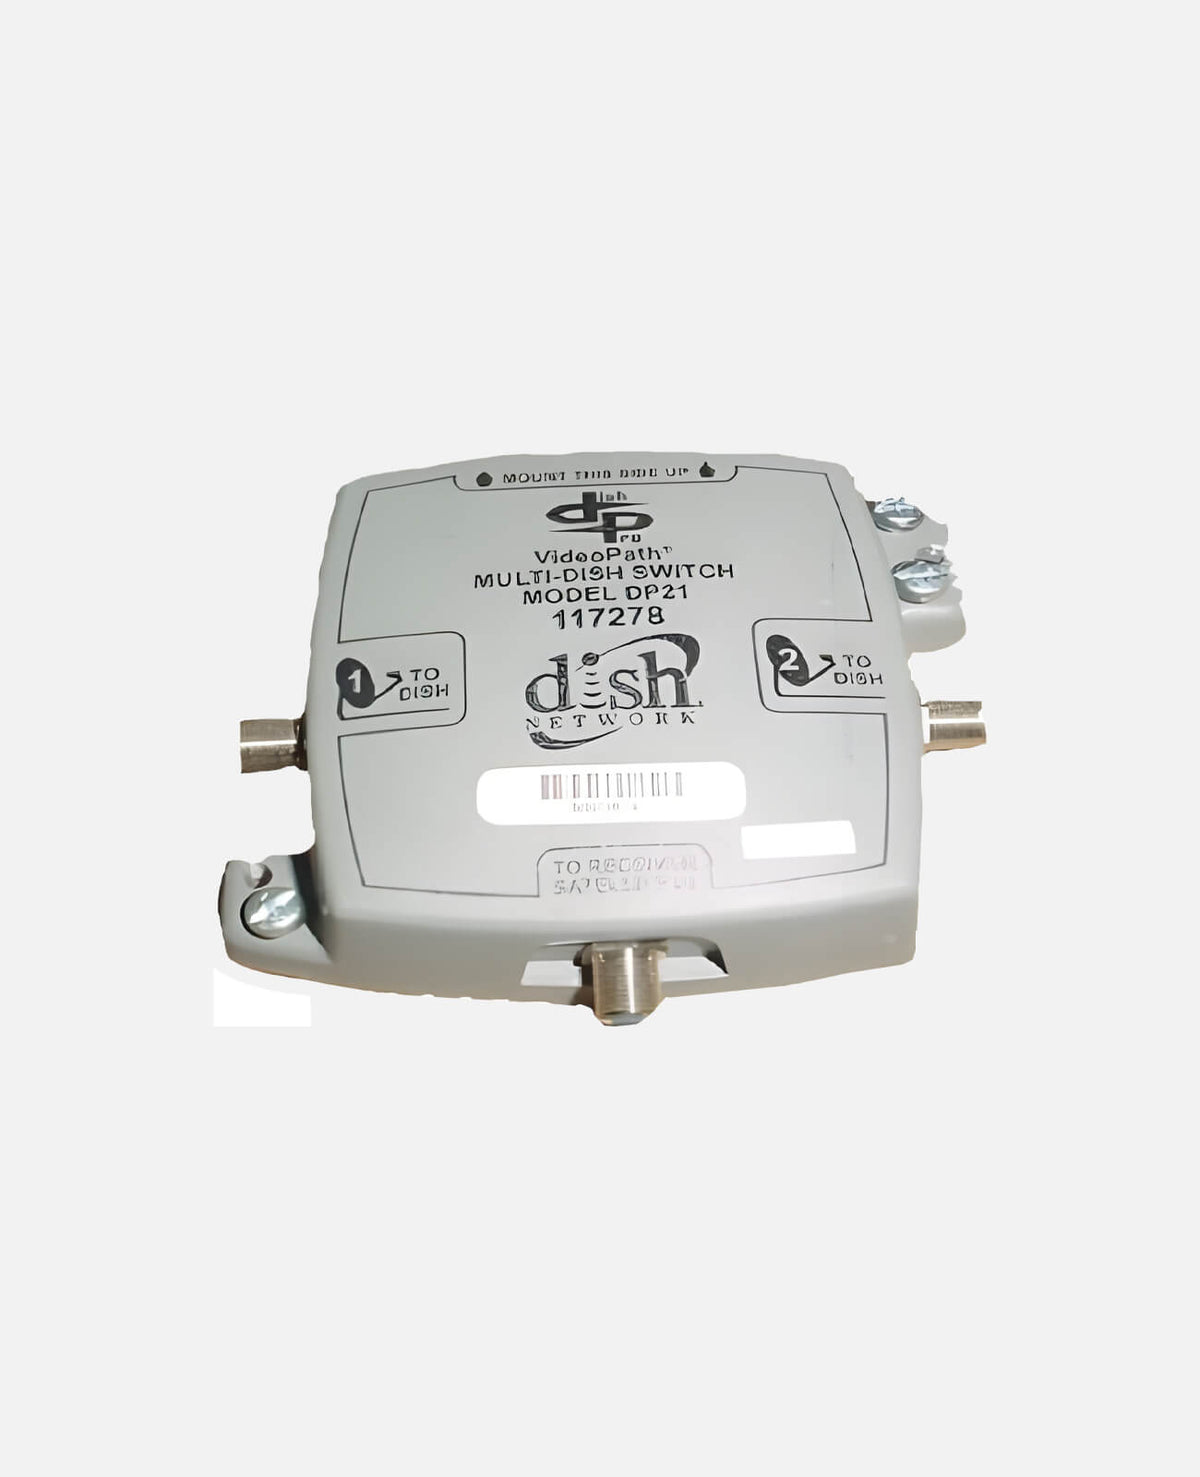 Dish Network DP 21 Switch